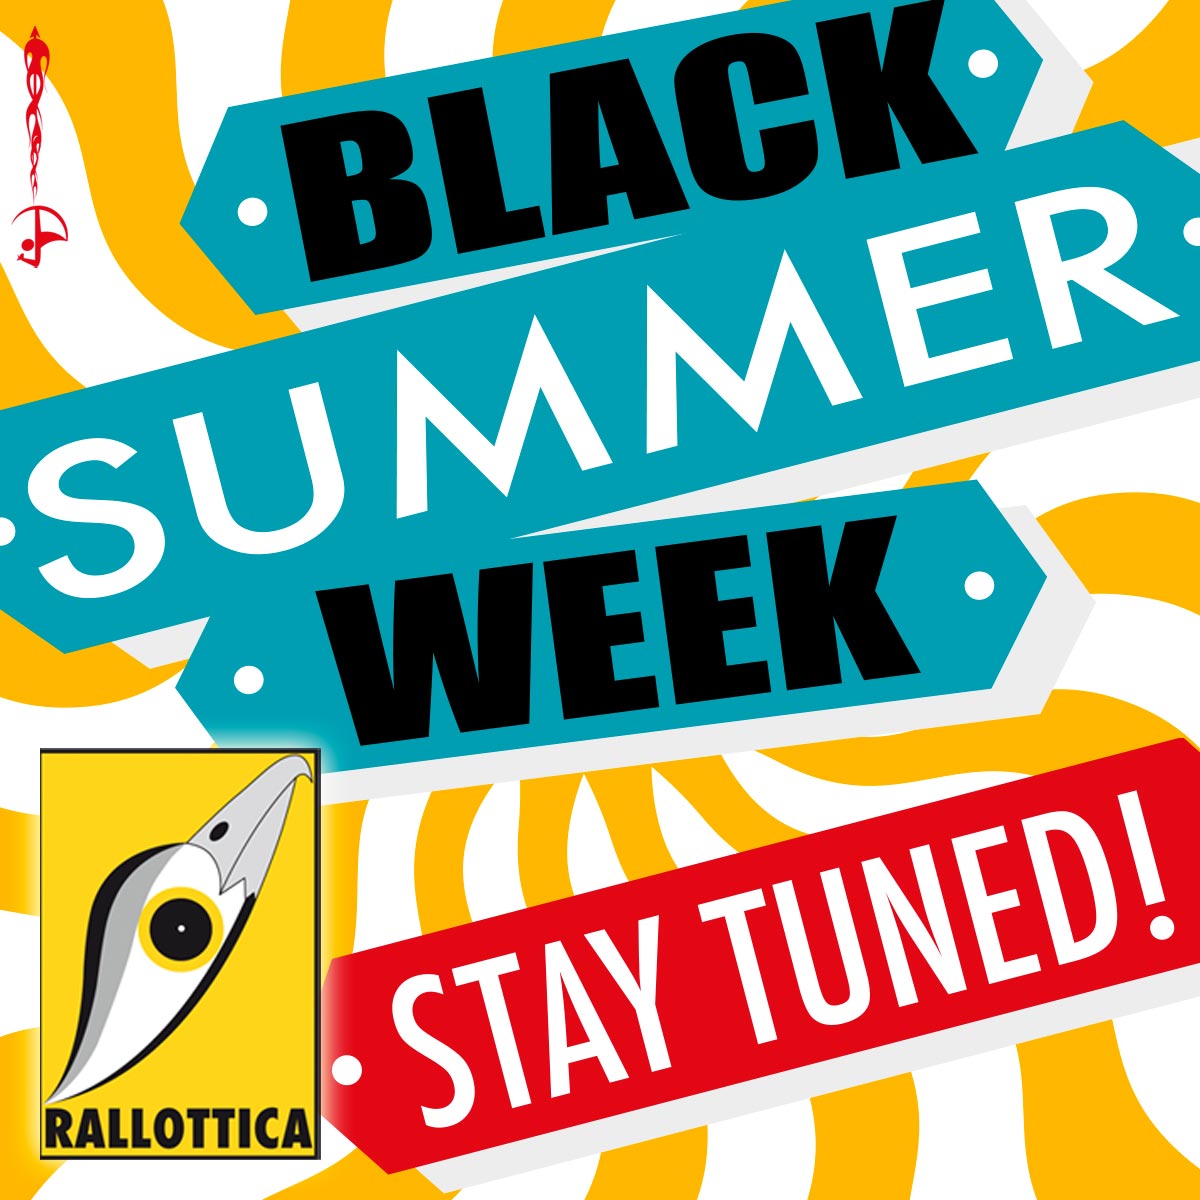 Black Summer Week - Stay Tuned!